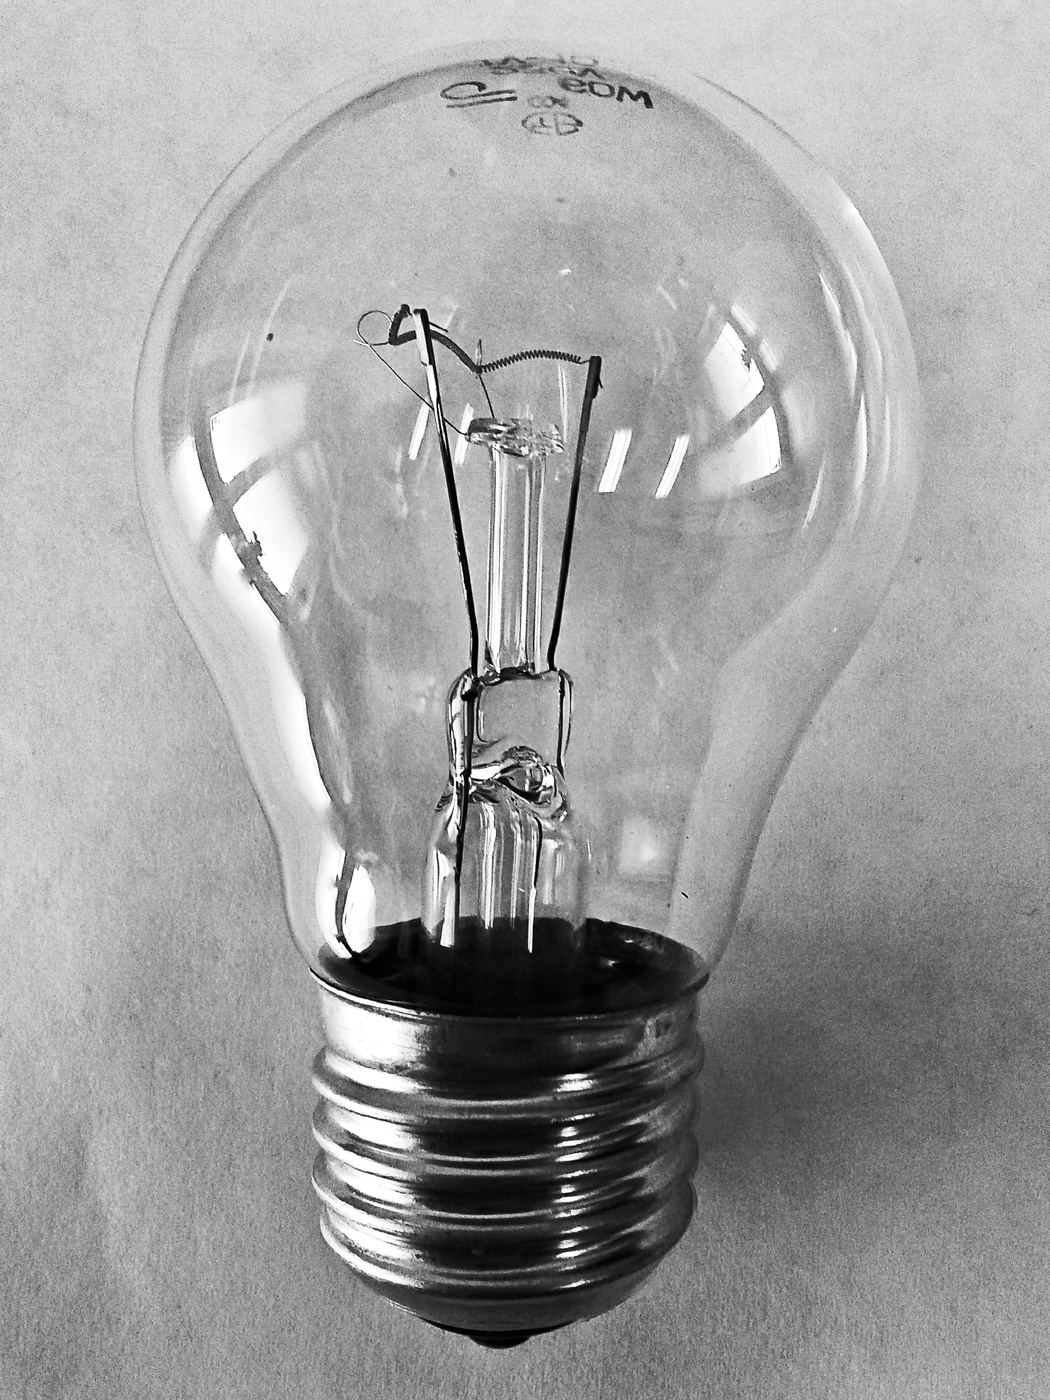 Лампочка ильича. Лампочка накаливания. Электрическая лампочка. Старая лампочка. Лампочка старинная.